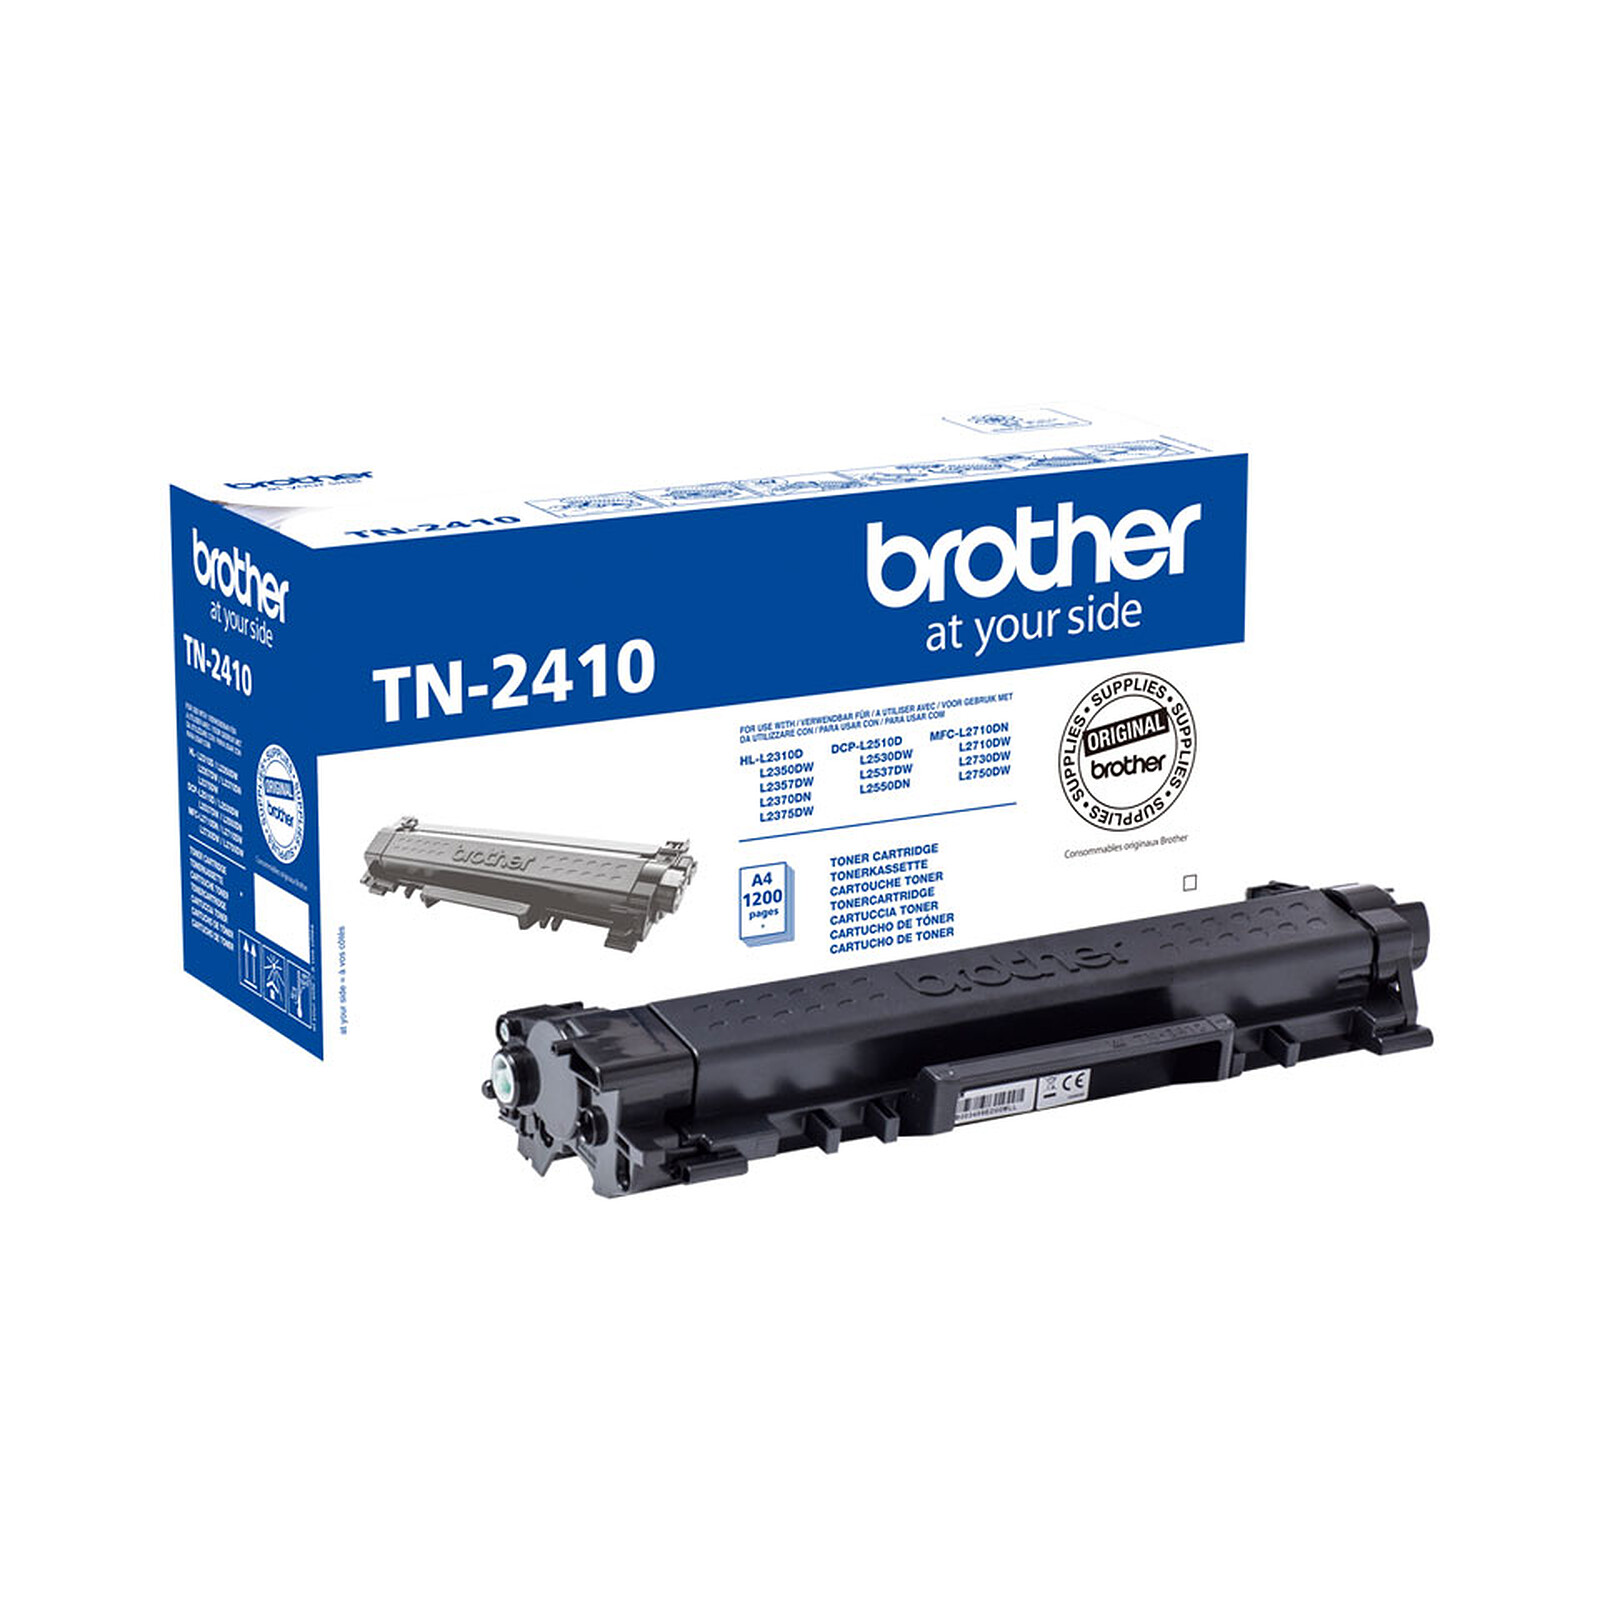 Brother tn-2410 Toner Cartridge